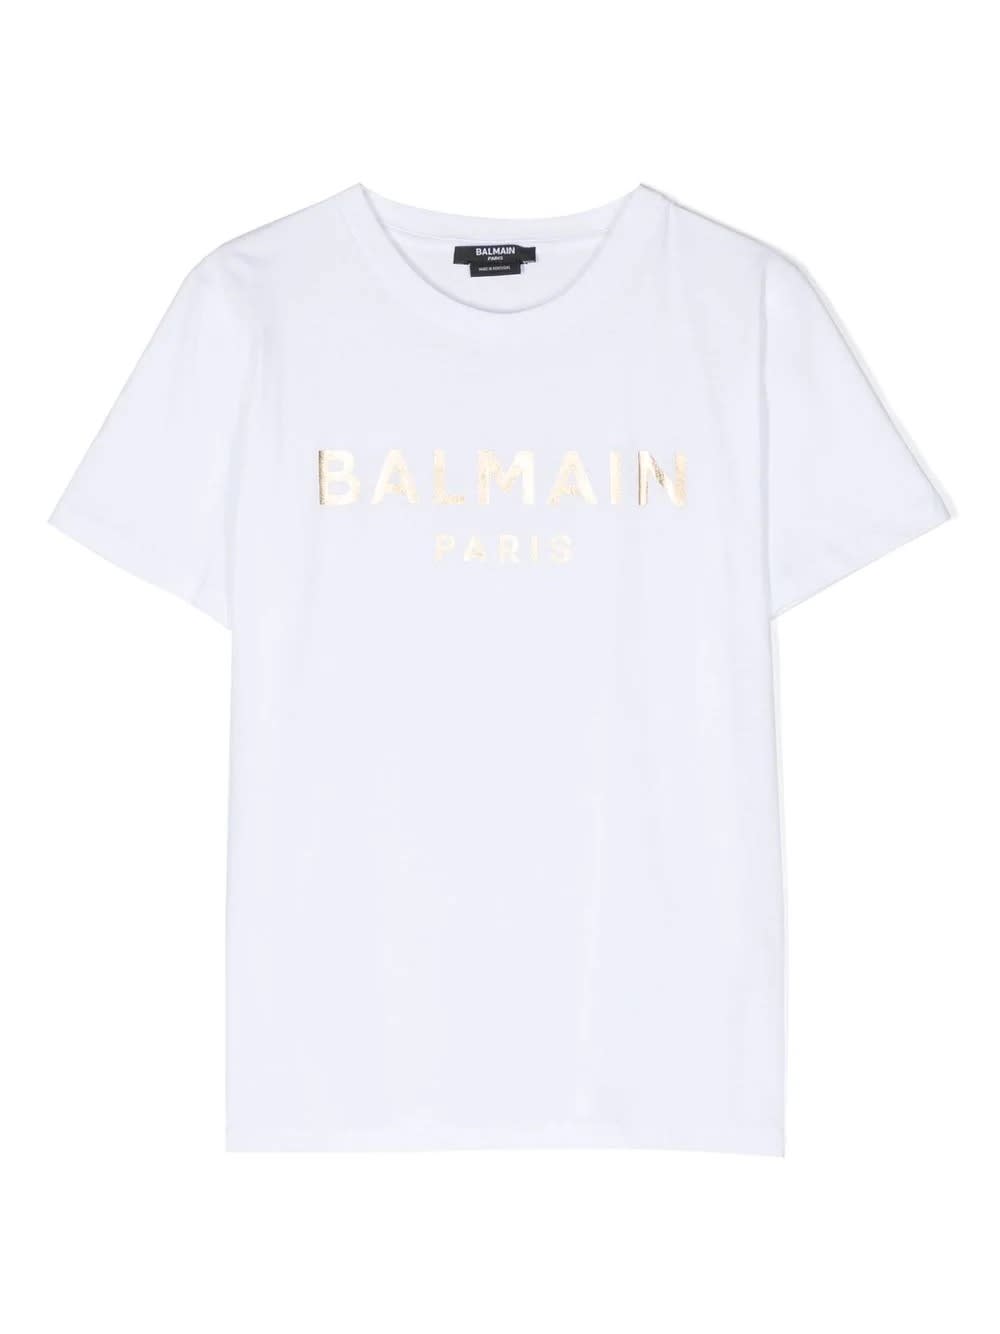 Balmain Kids' White T-shirt With Golden Logo